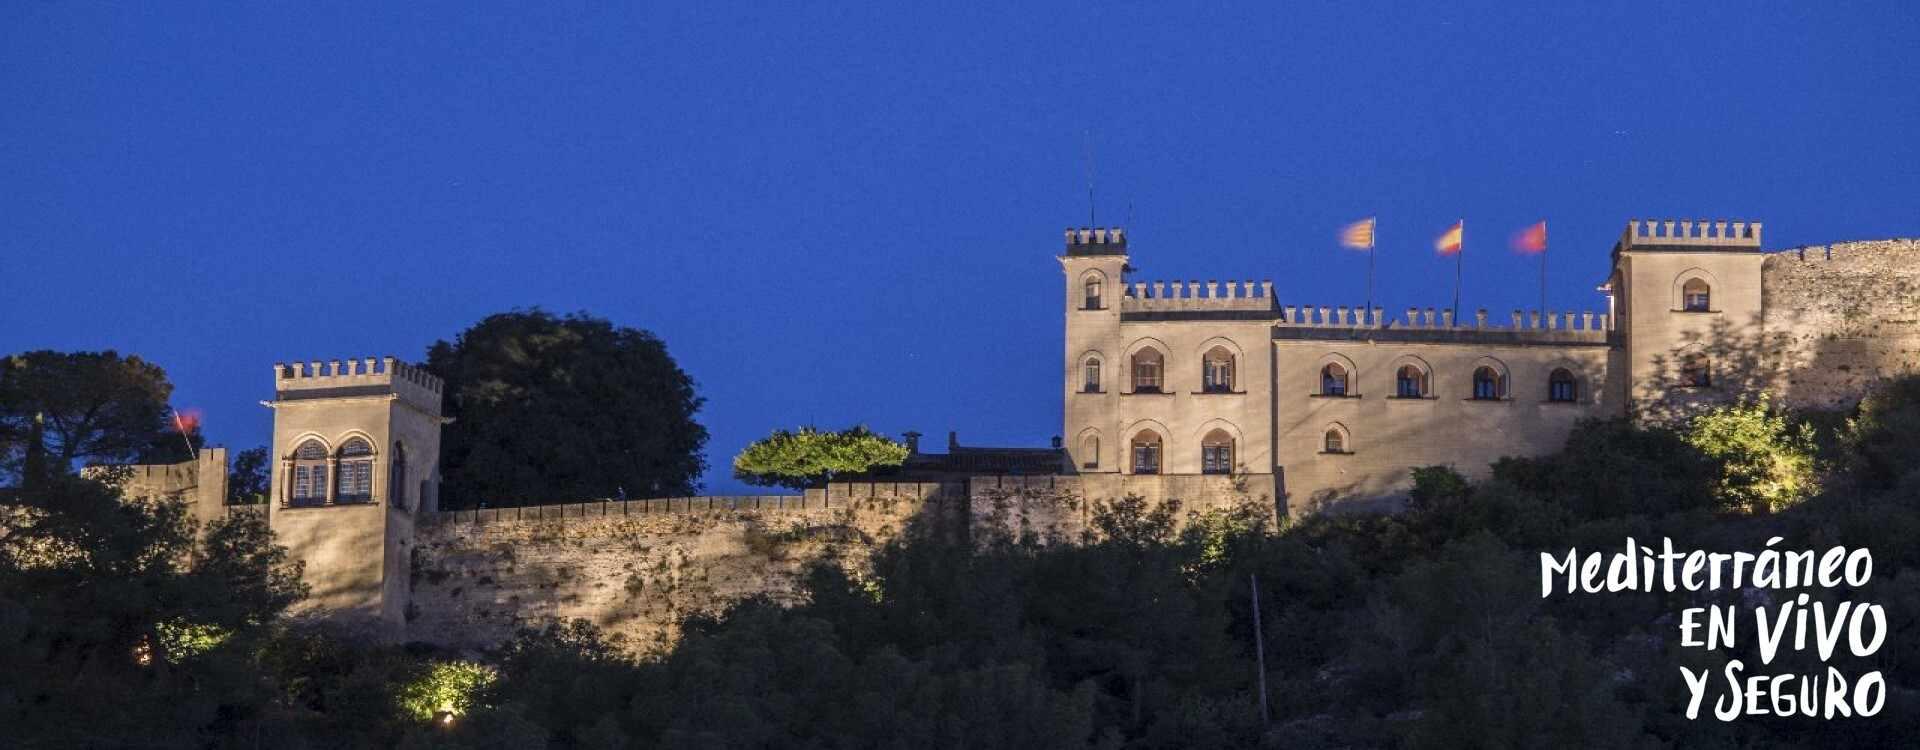 Imagen del Castillo de Xàtiva alumbrado de noche 